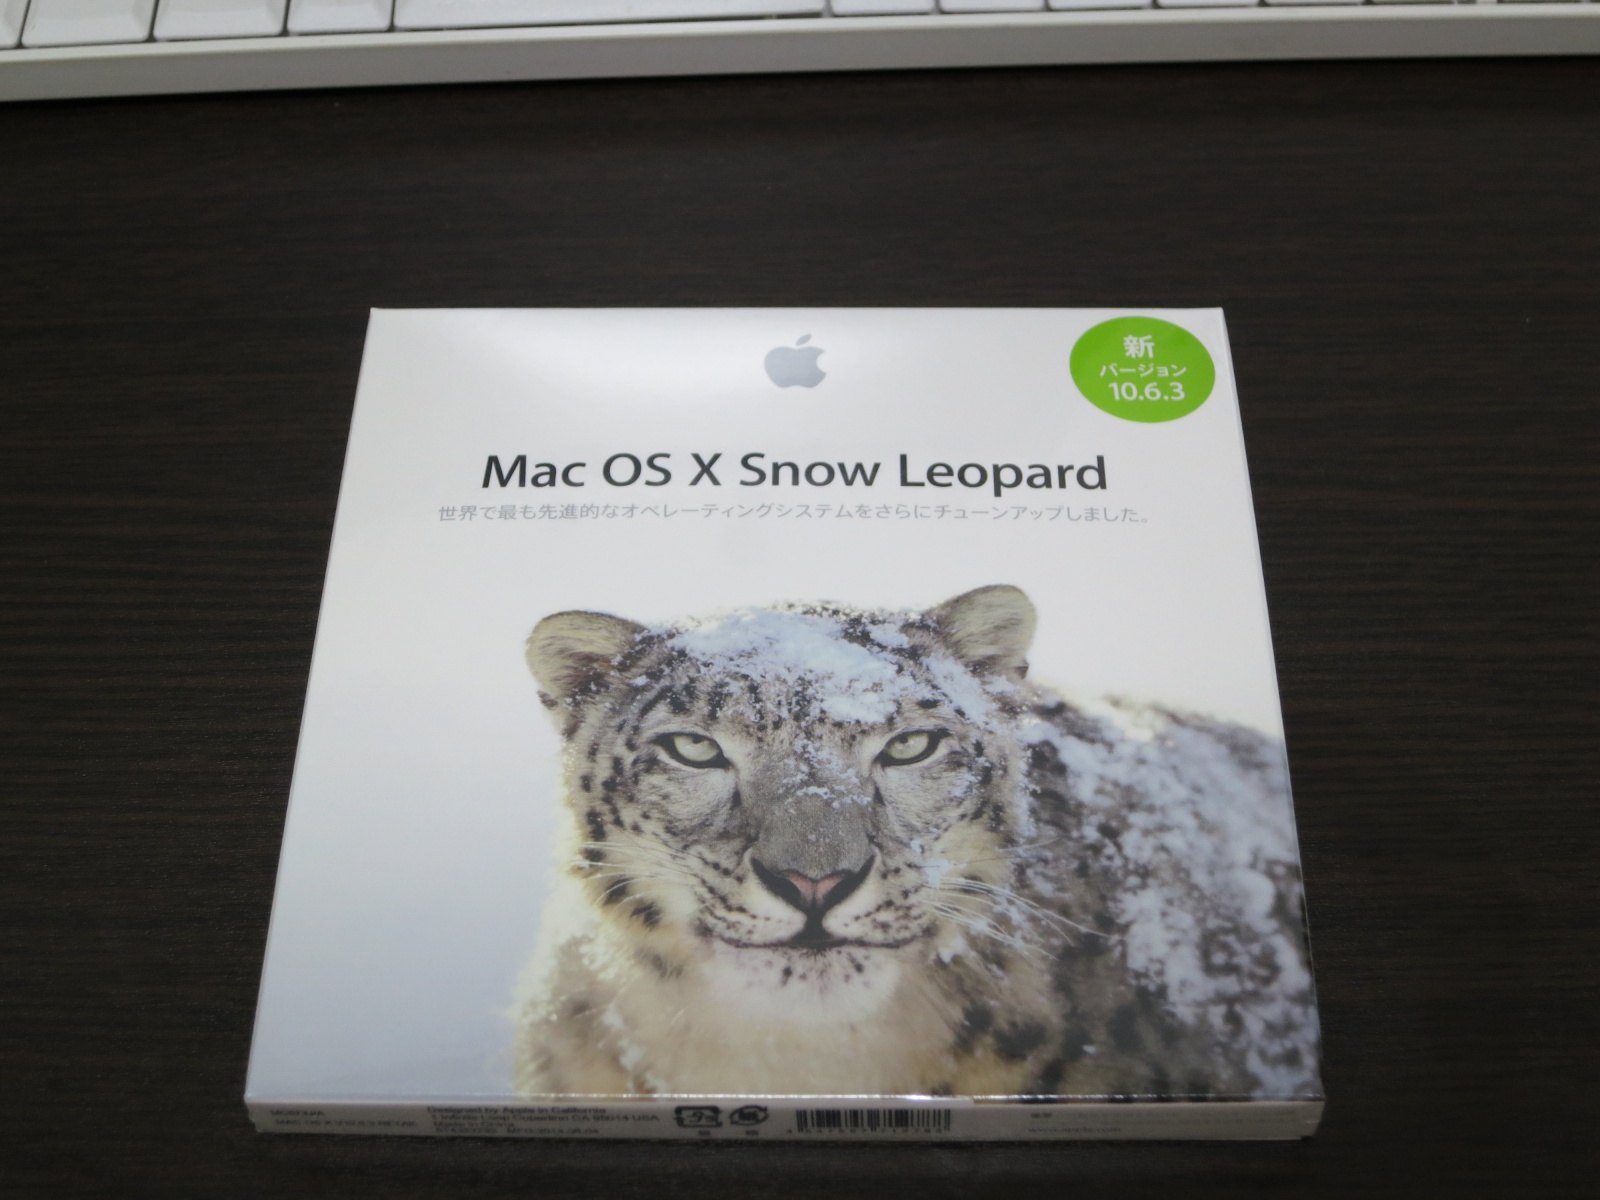 OS X v10.6 Snow Leopard